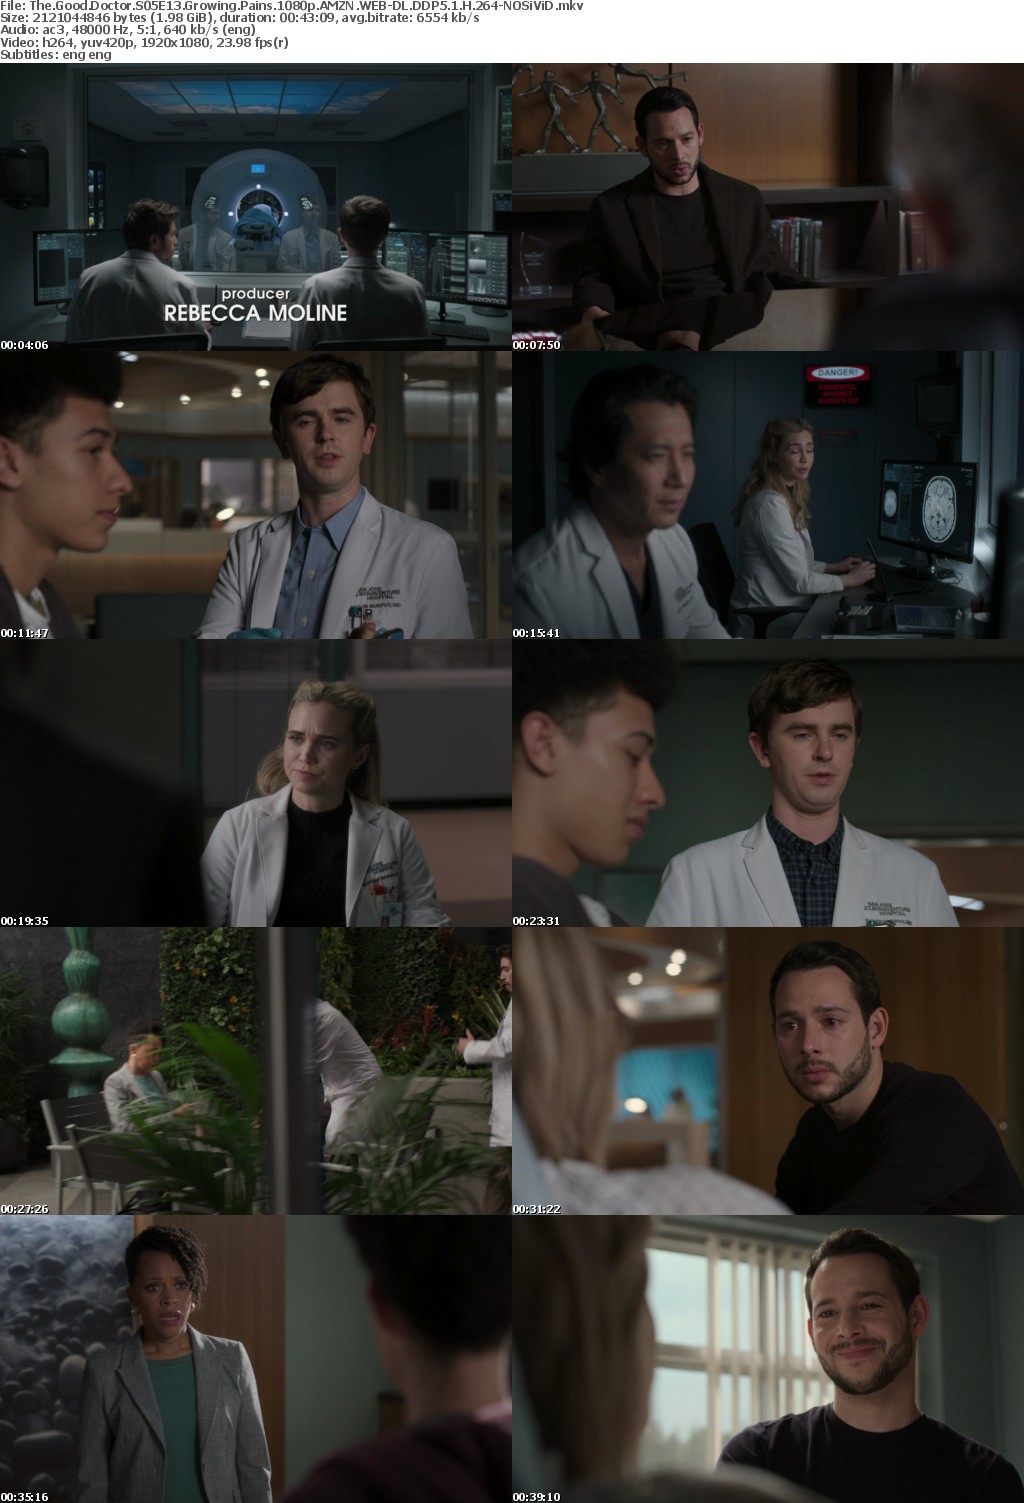 The Good Doctor S05E13 Growing Pains 1080p AMZN WEBRip DDP5 1 x264-NOSiViD